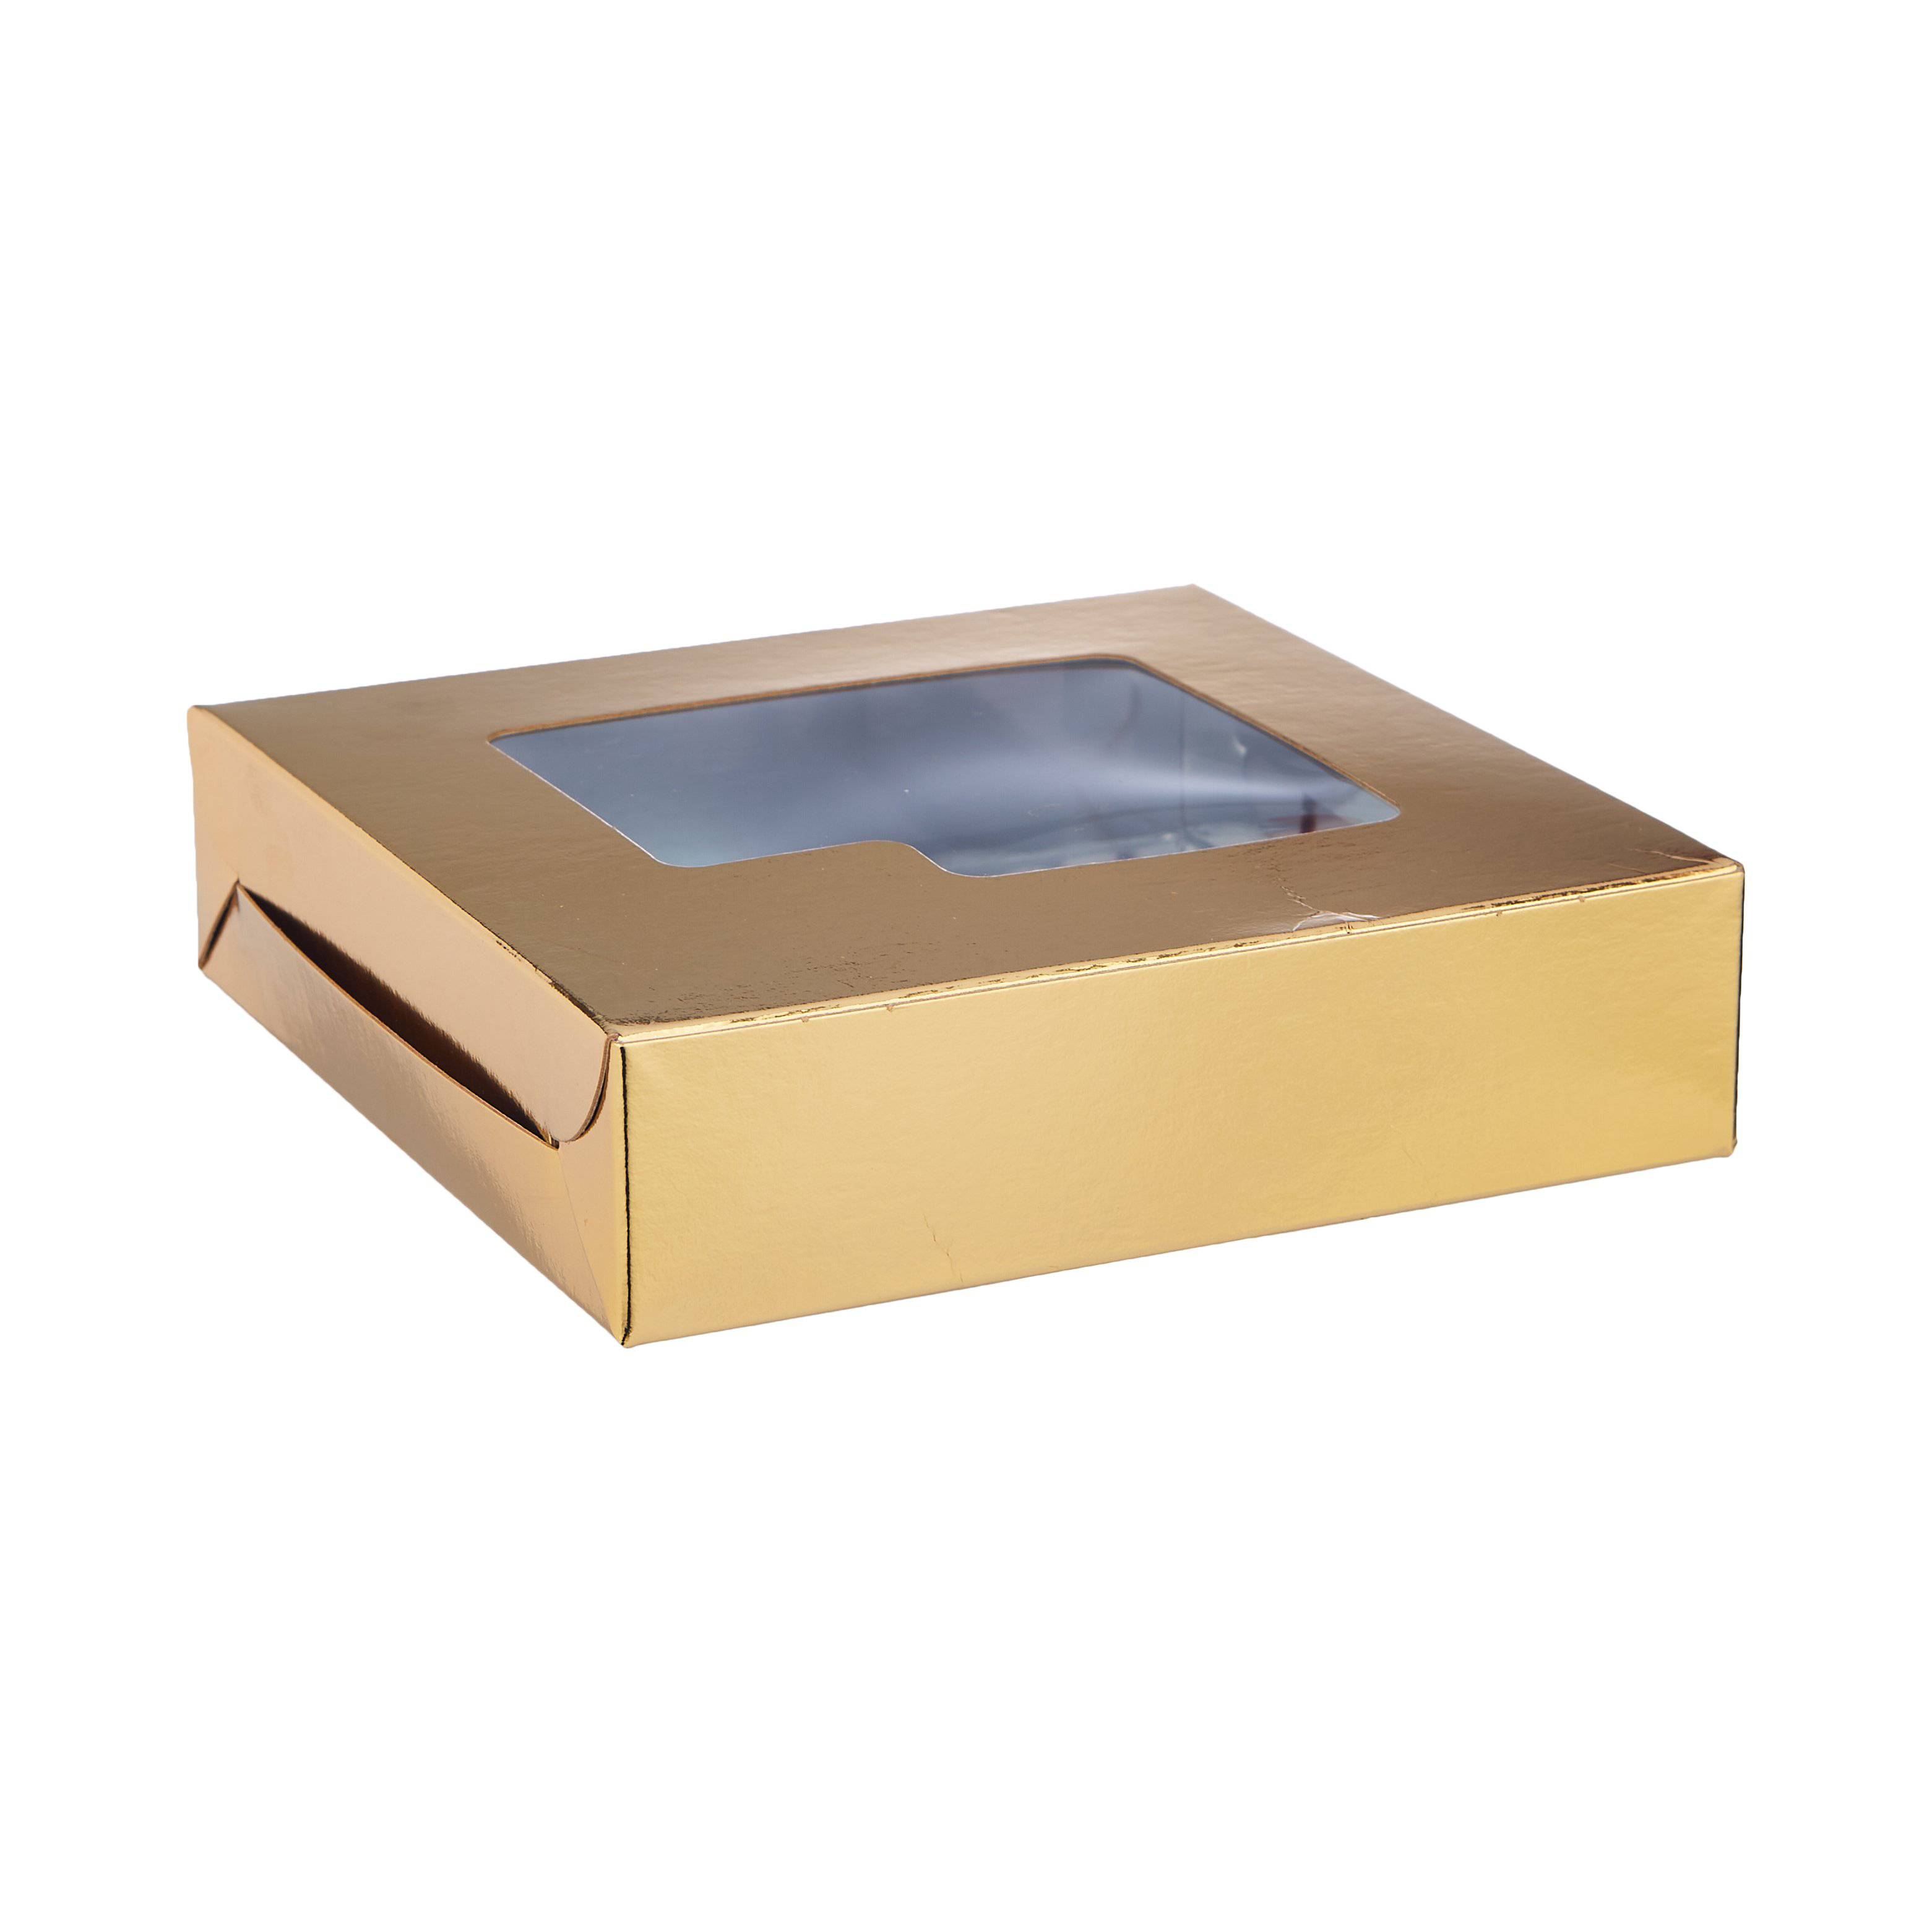 SWEET BOX GOLDEN 15x15 CM - Hotpack Global